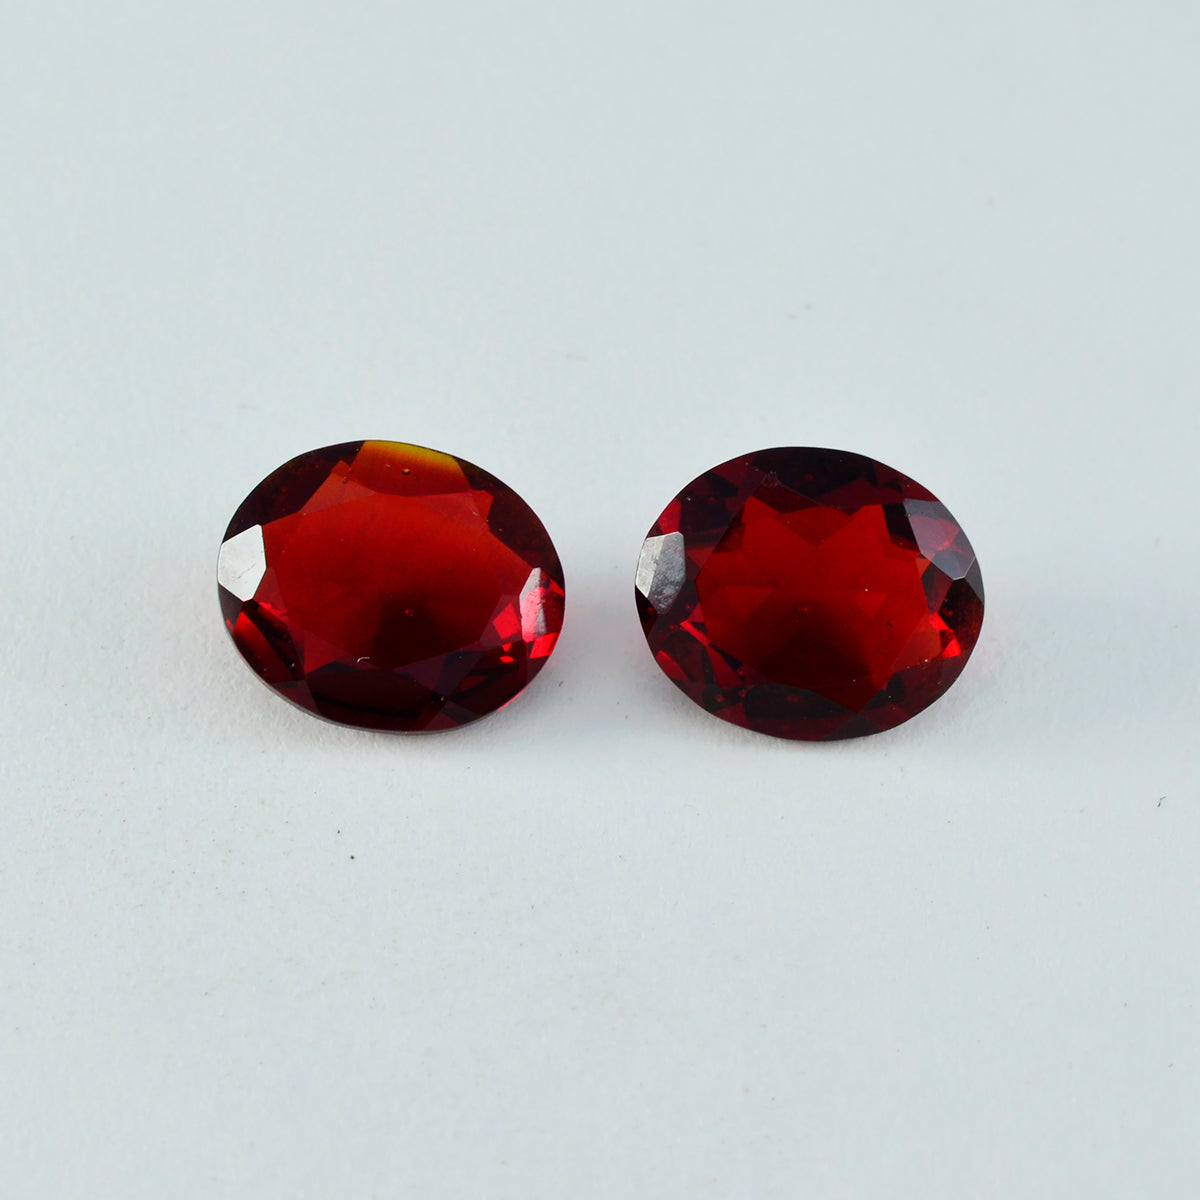 Riyogems 1PC Red Ruby CZ Faceted 10x12 mm Oval Shape fantastic Quality Loose Gems